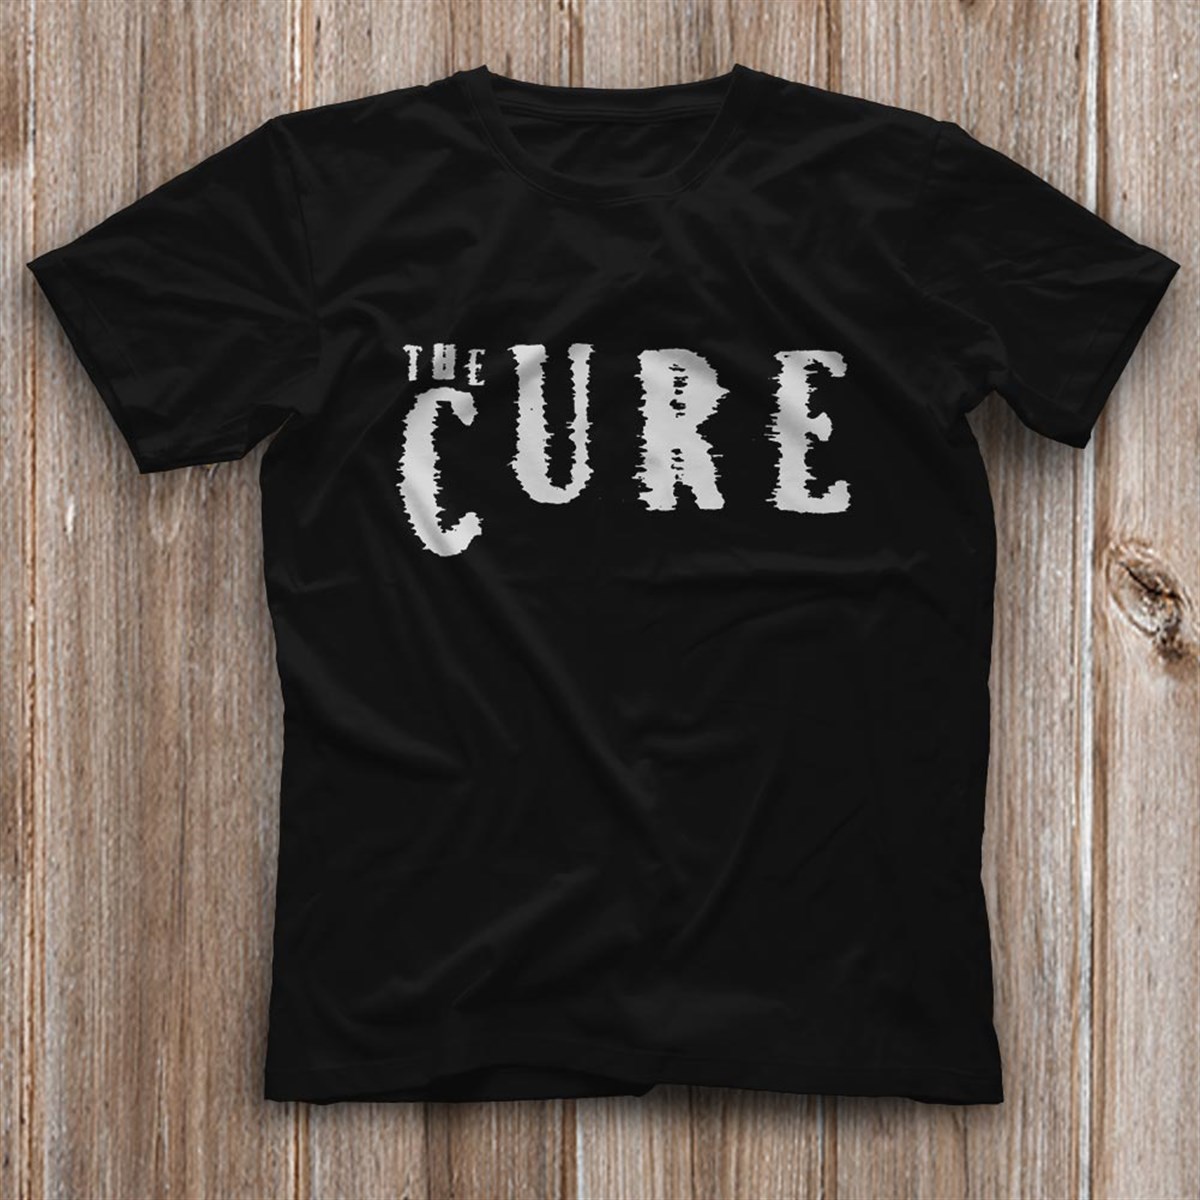 The Cure T shirt , Music Band ,Unisex Tshirt 01/